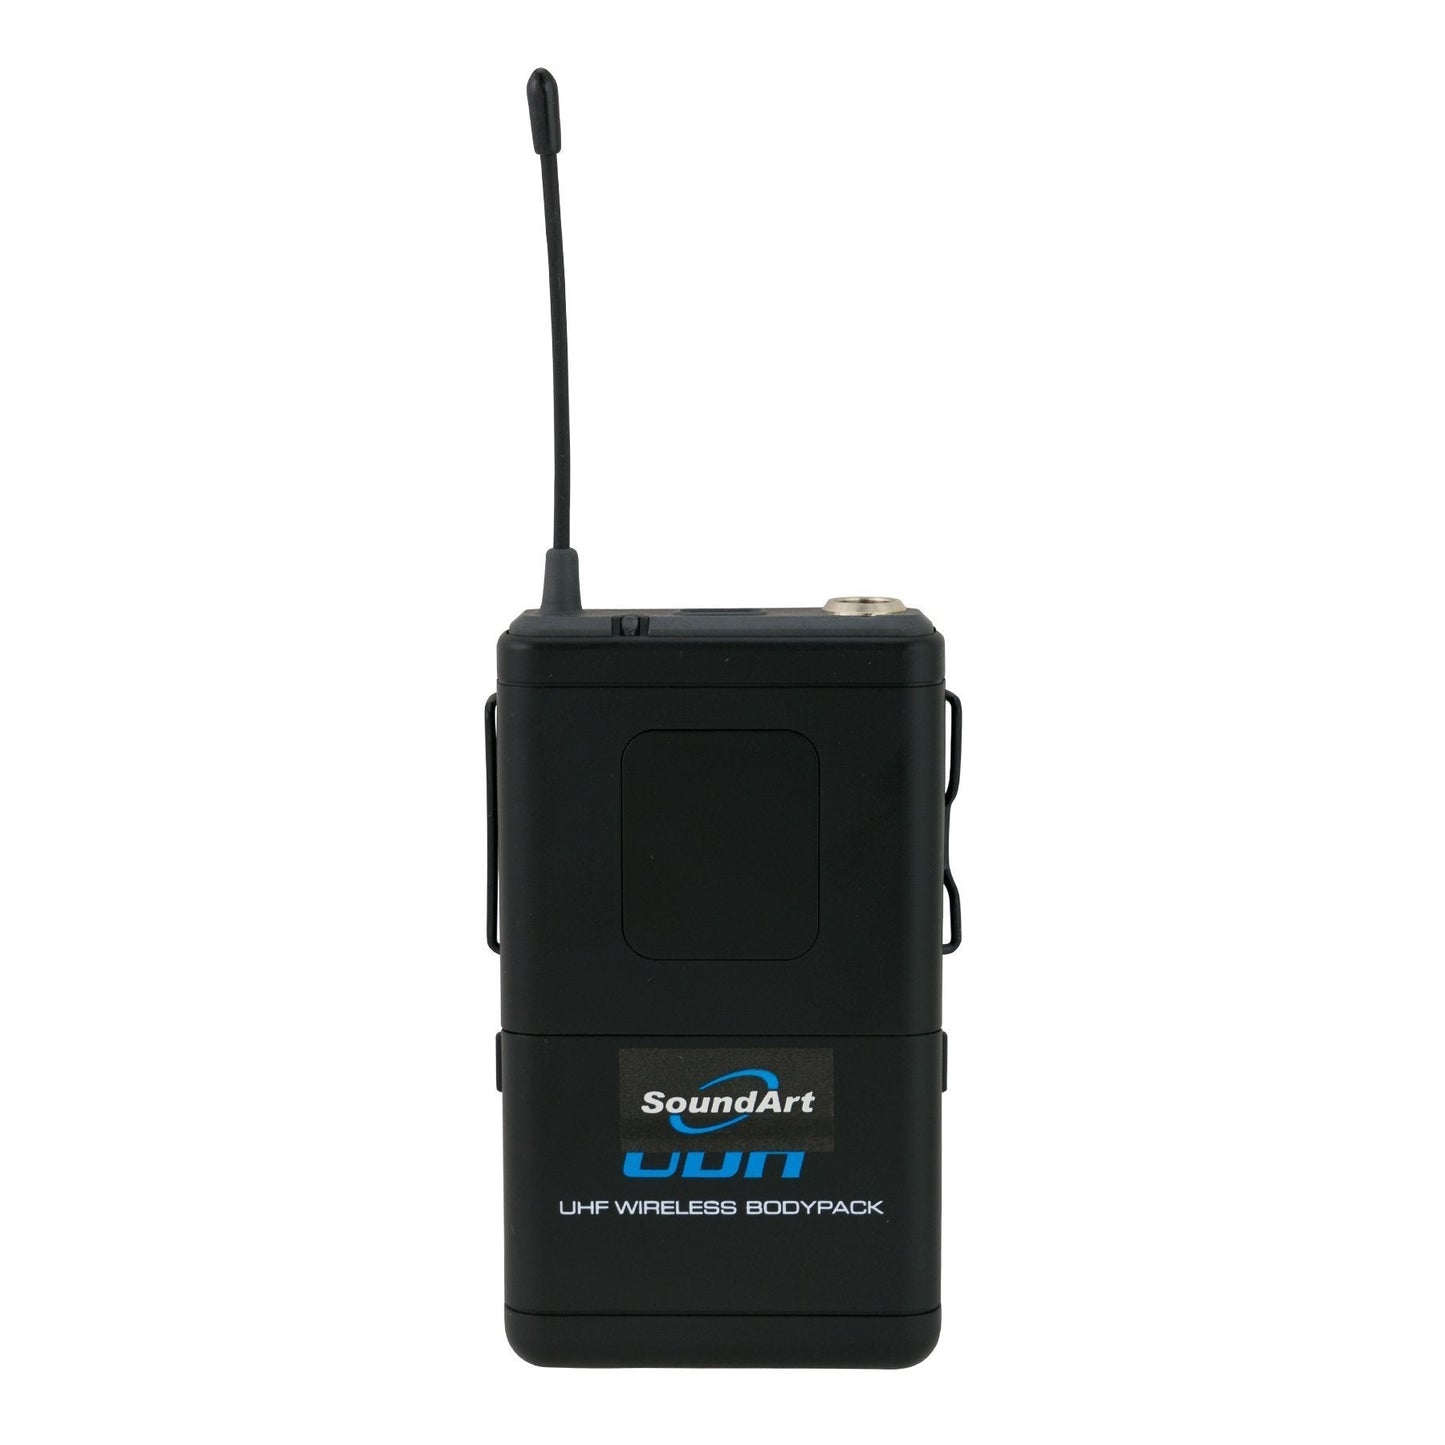 SoundArt 6 Channel 400 Watt Dual Wireless Powered Mixer PA System with DVD Player